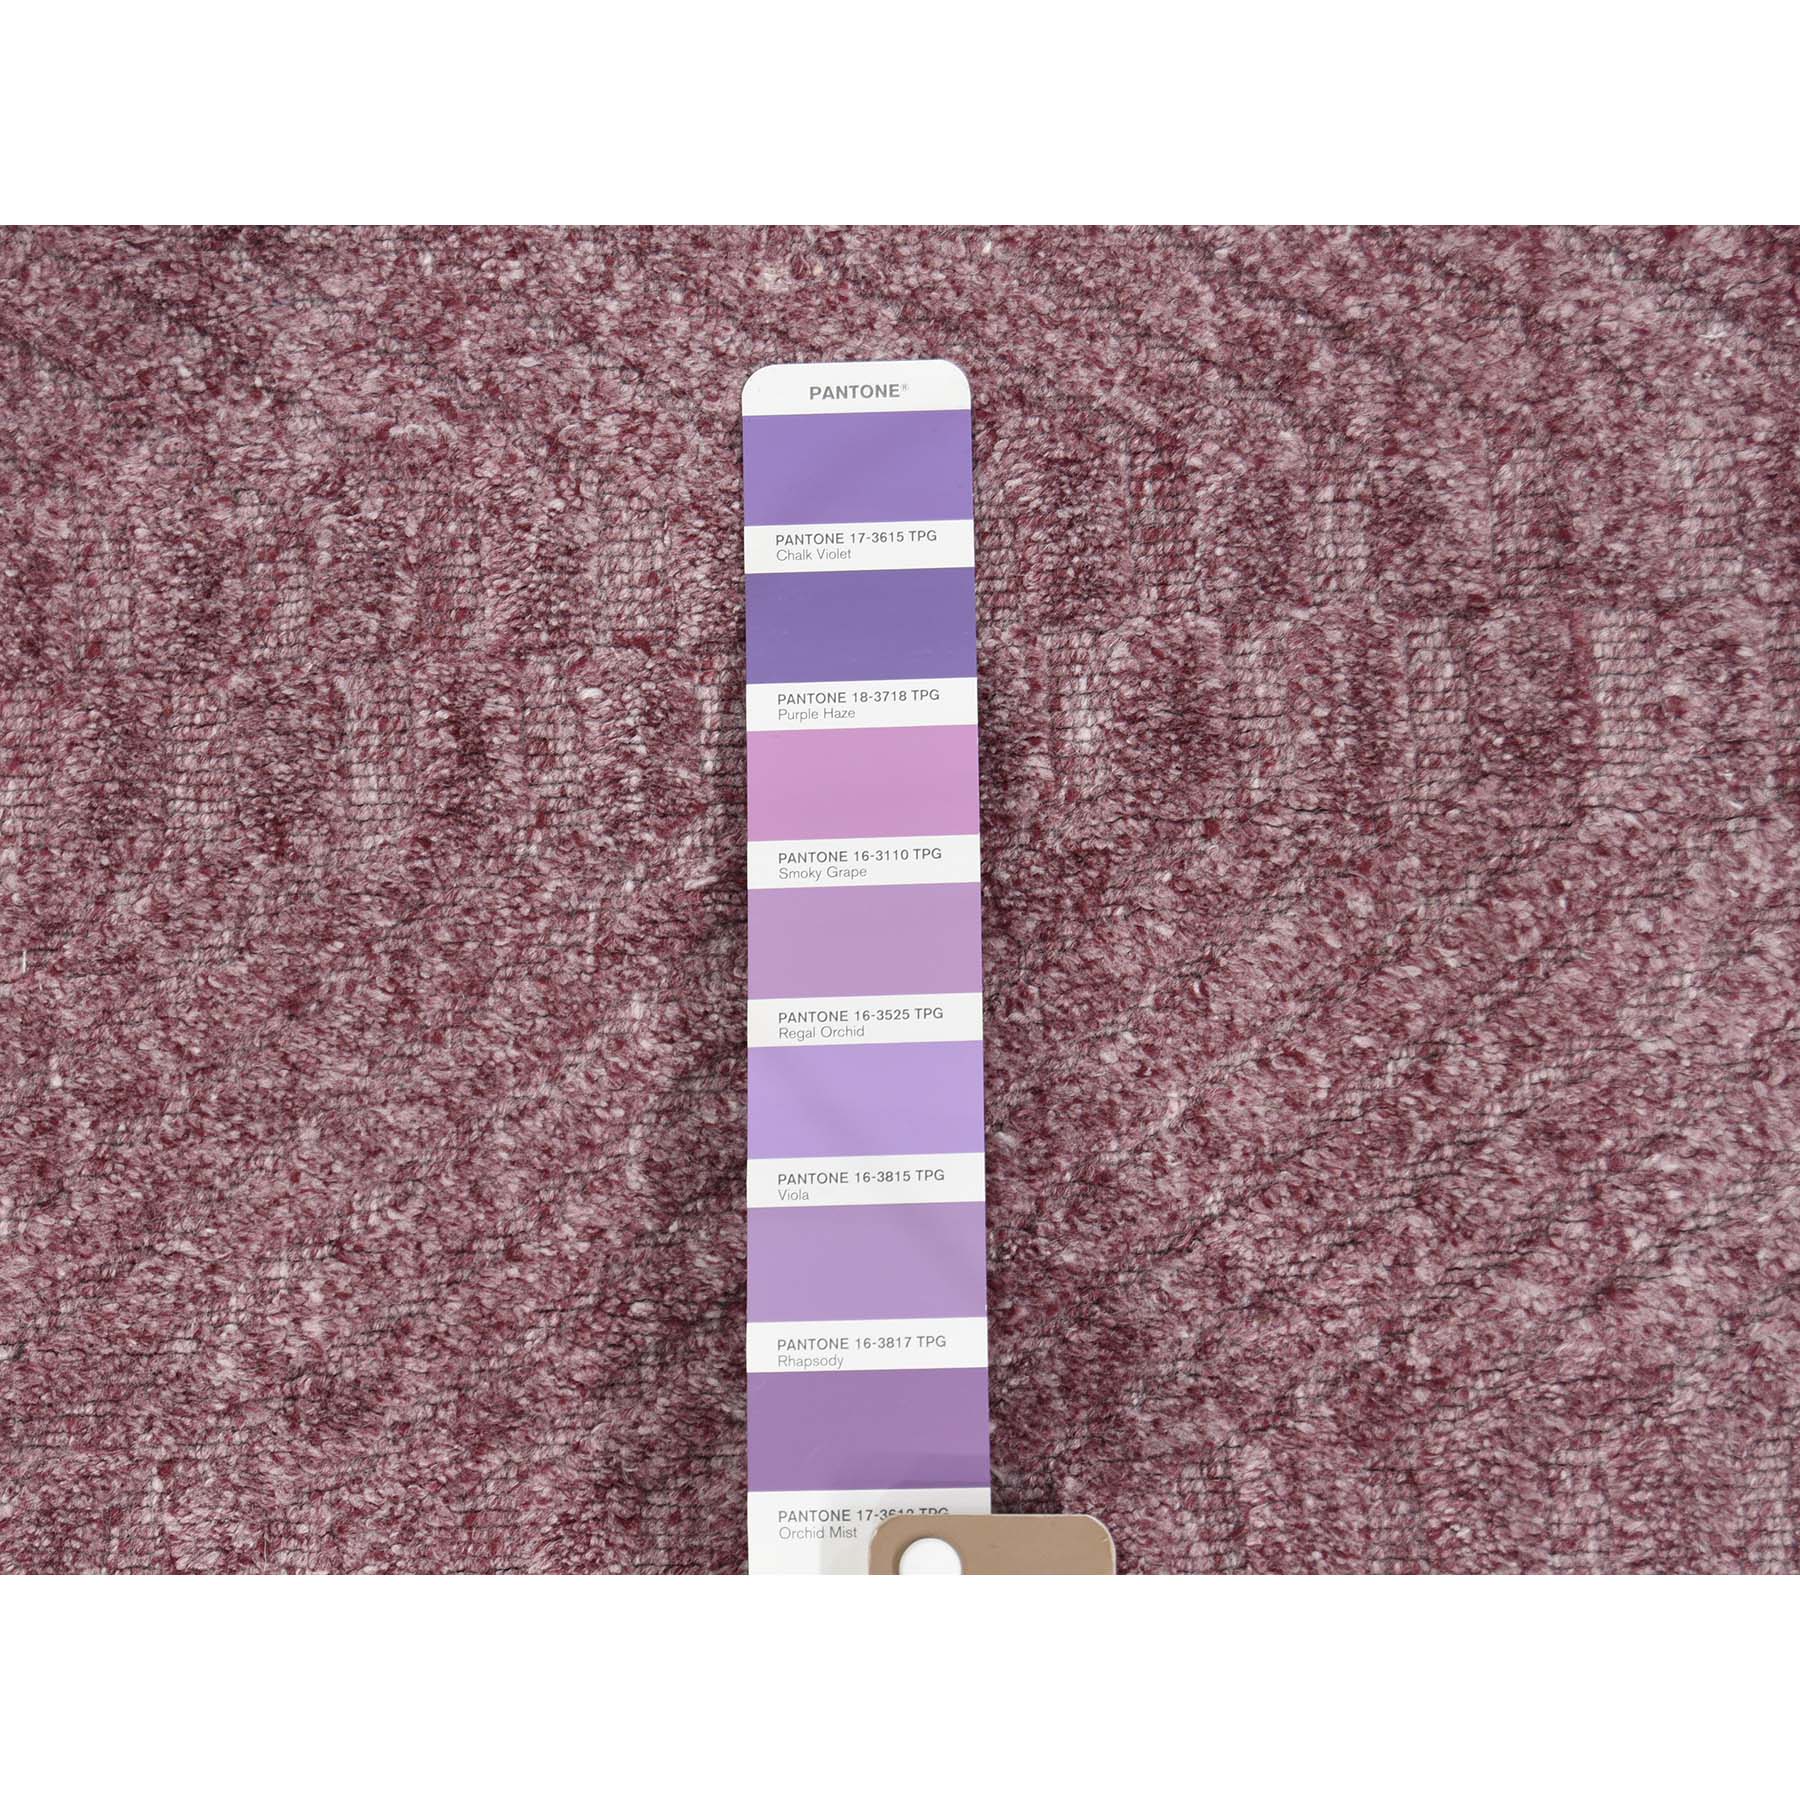 5-1 x7-1  Hand-Loomed Purple Tone on Tone Pure Wool Oriental Rug 